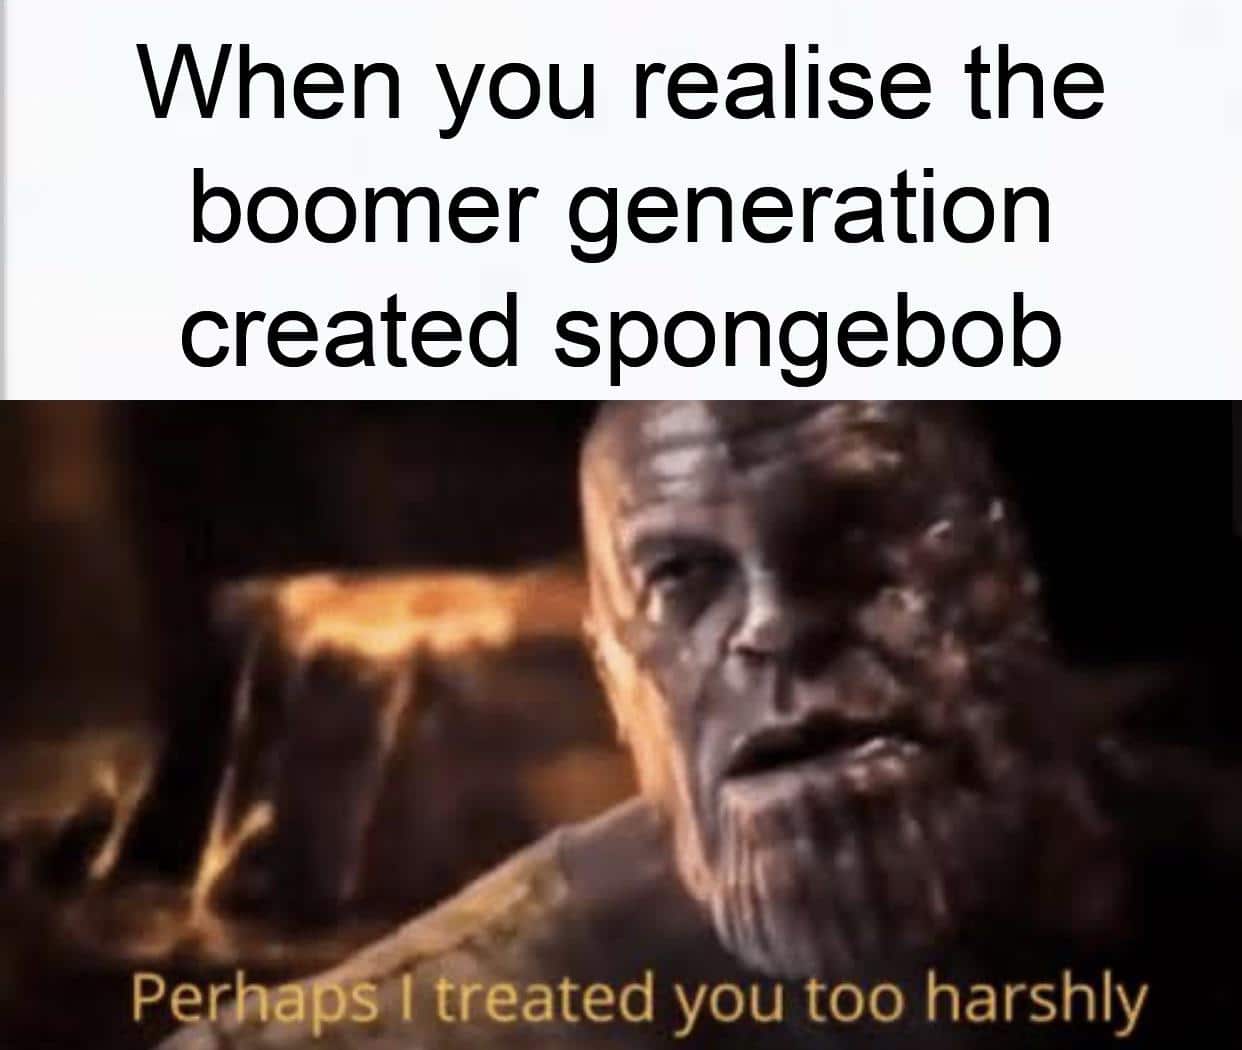 spongebob spongebob-memes spongebob text: When you realise the boomer generation created spongebob s